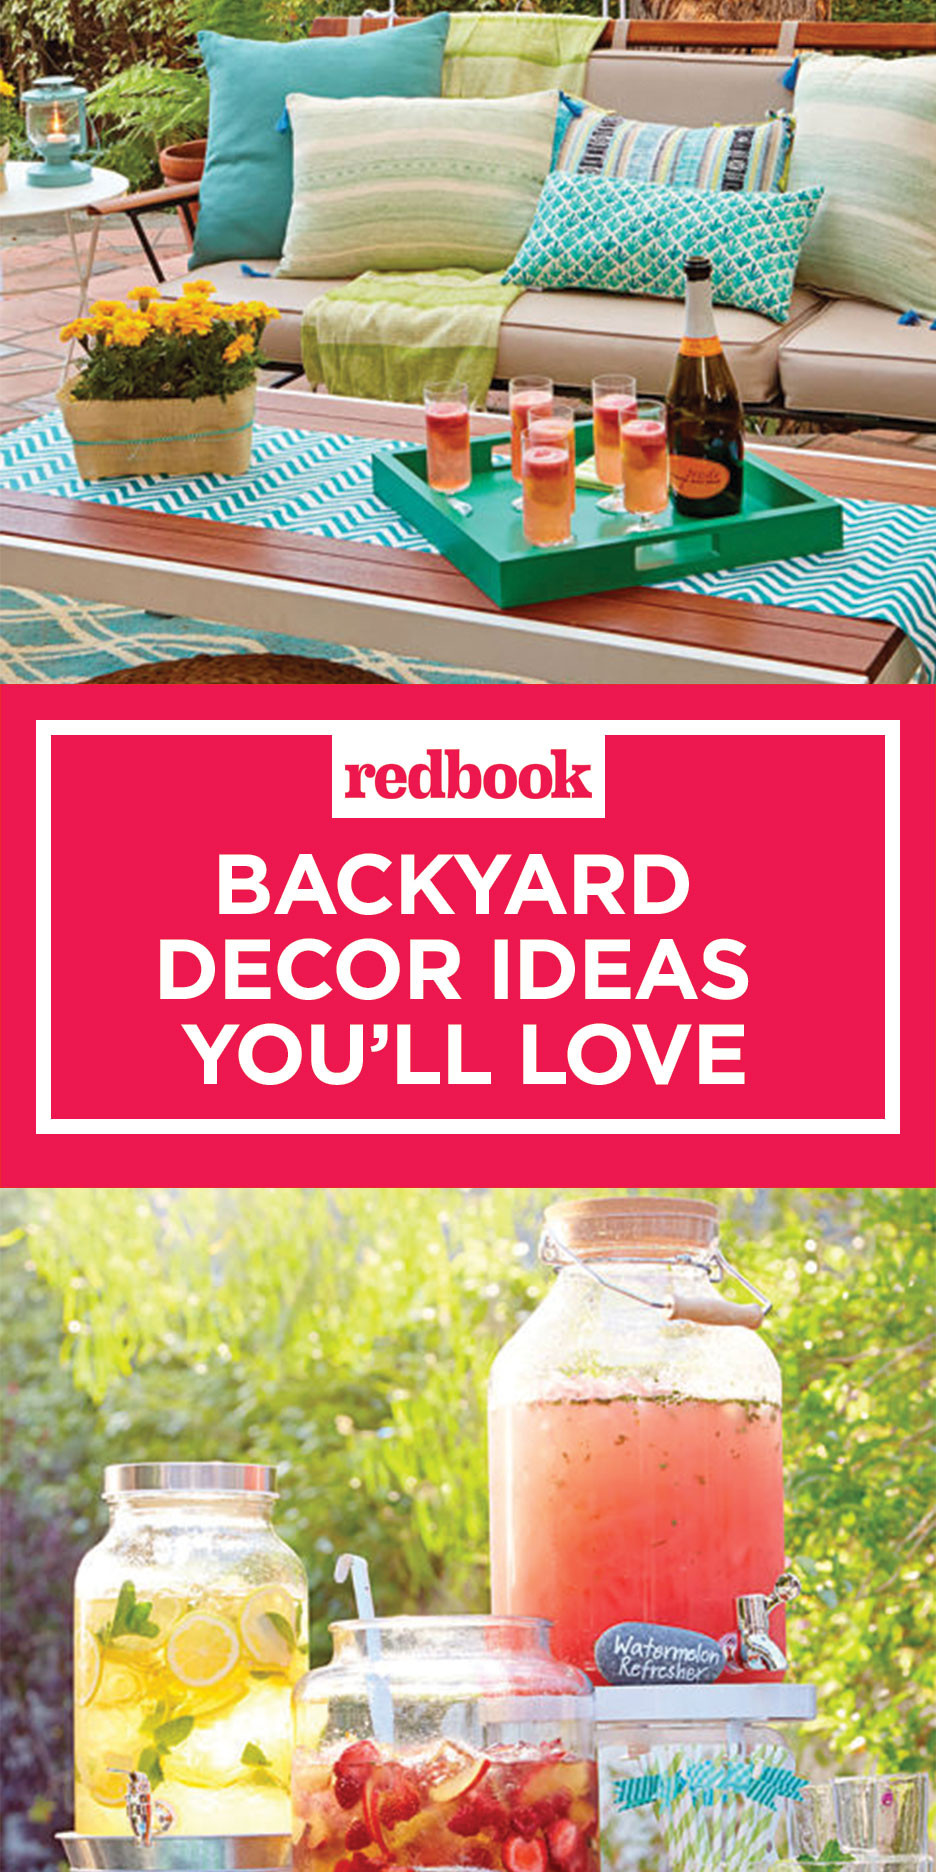 Backyard Summer Birthday Party Ideas
 14 Best Backyard Party Ideas for Adults Summer